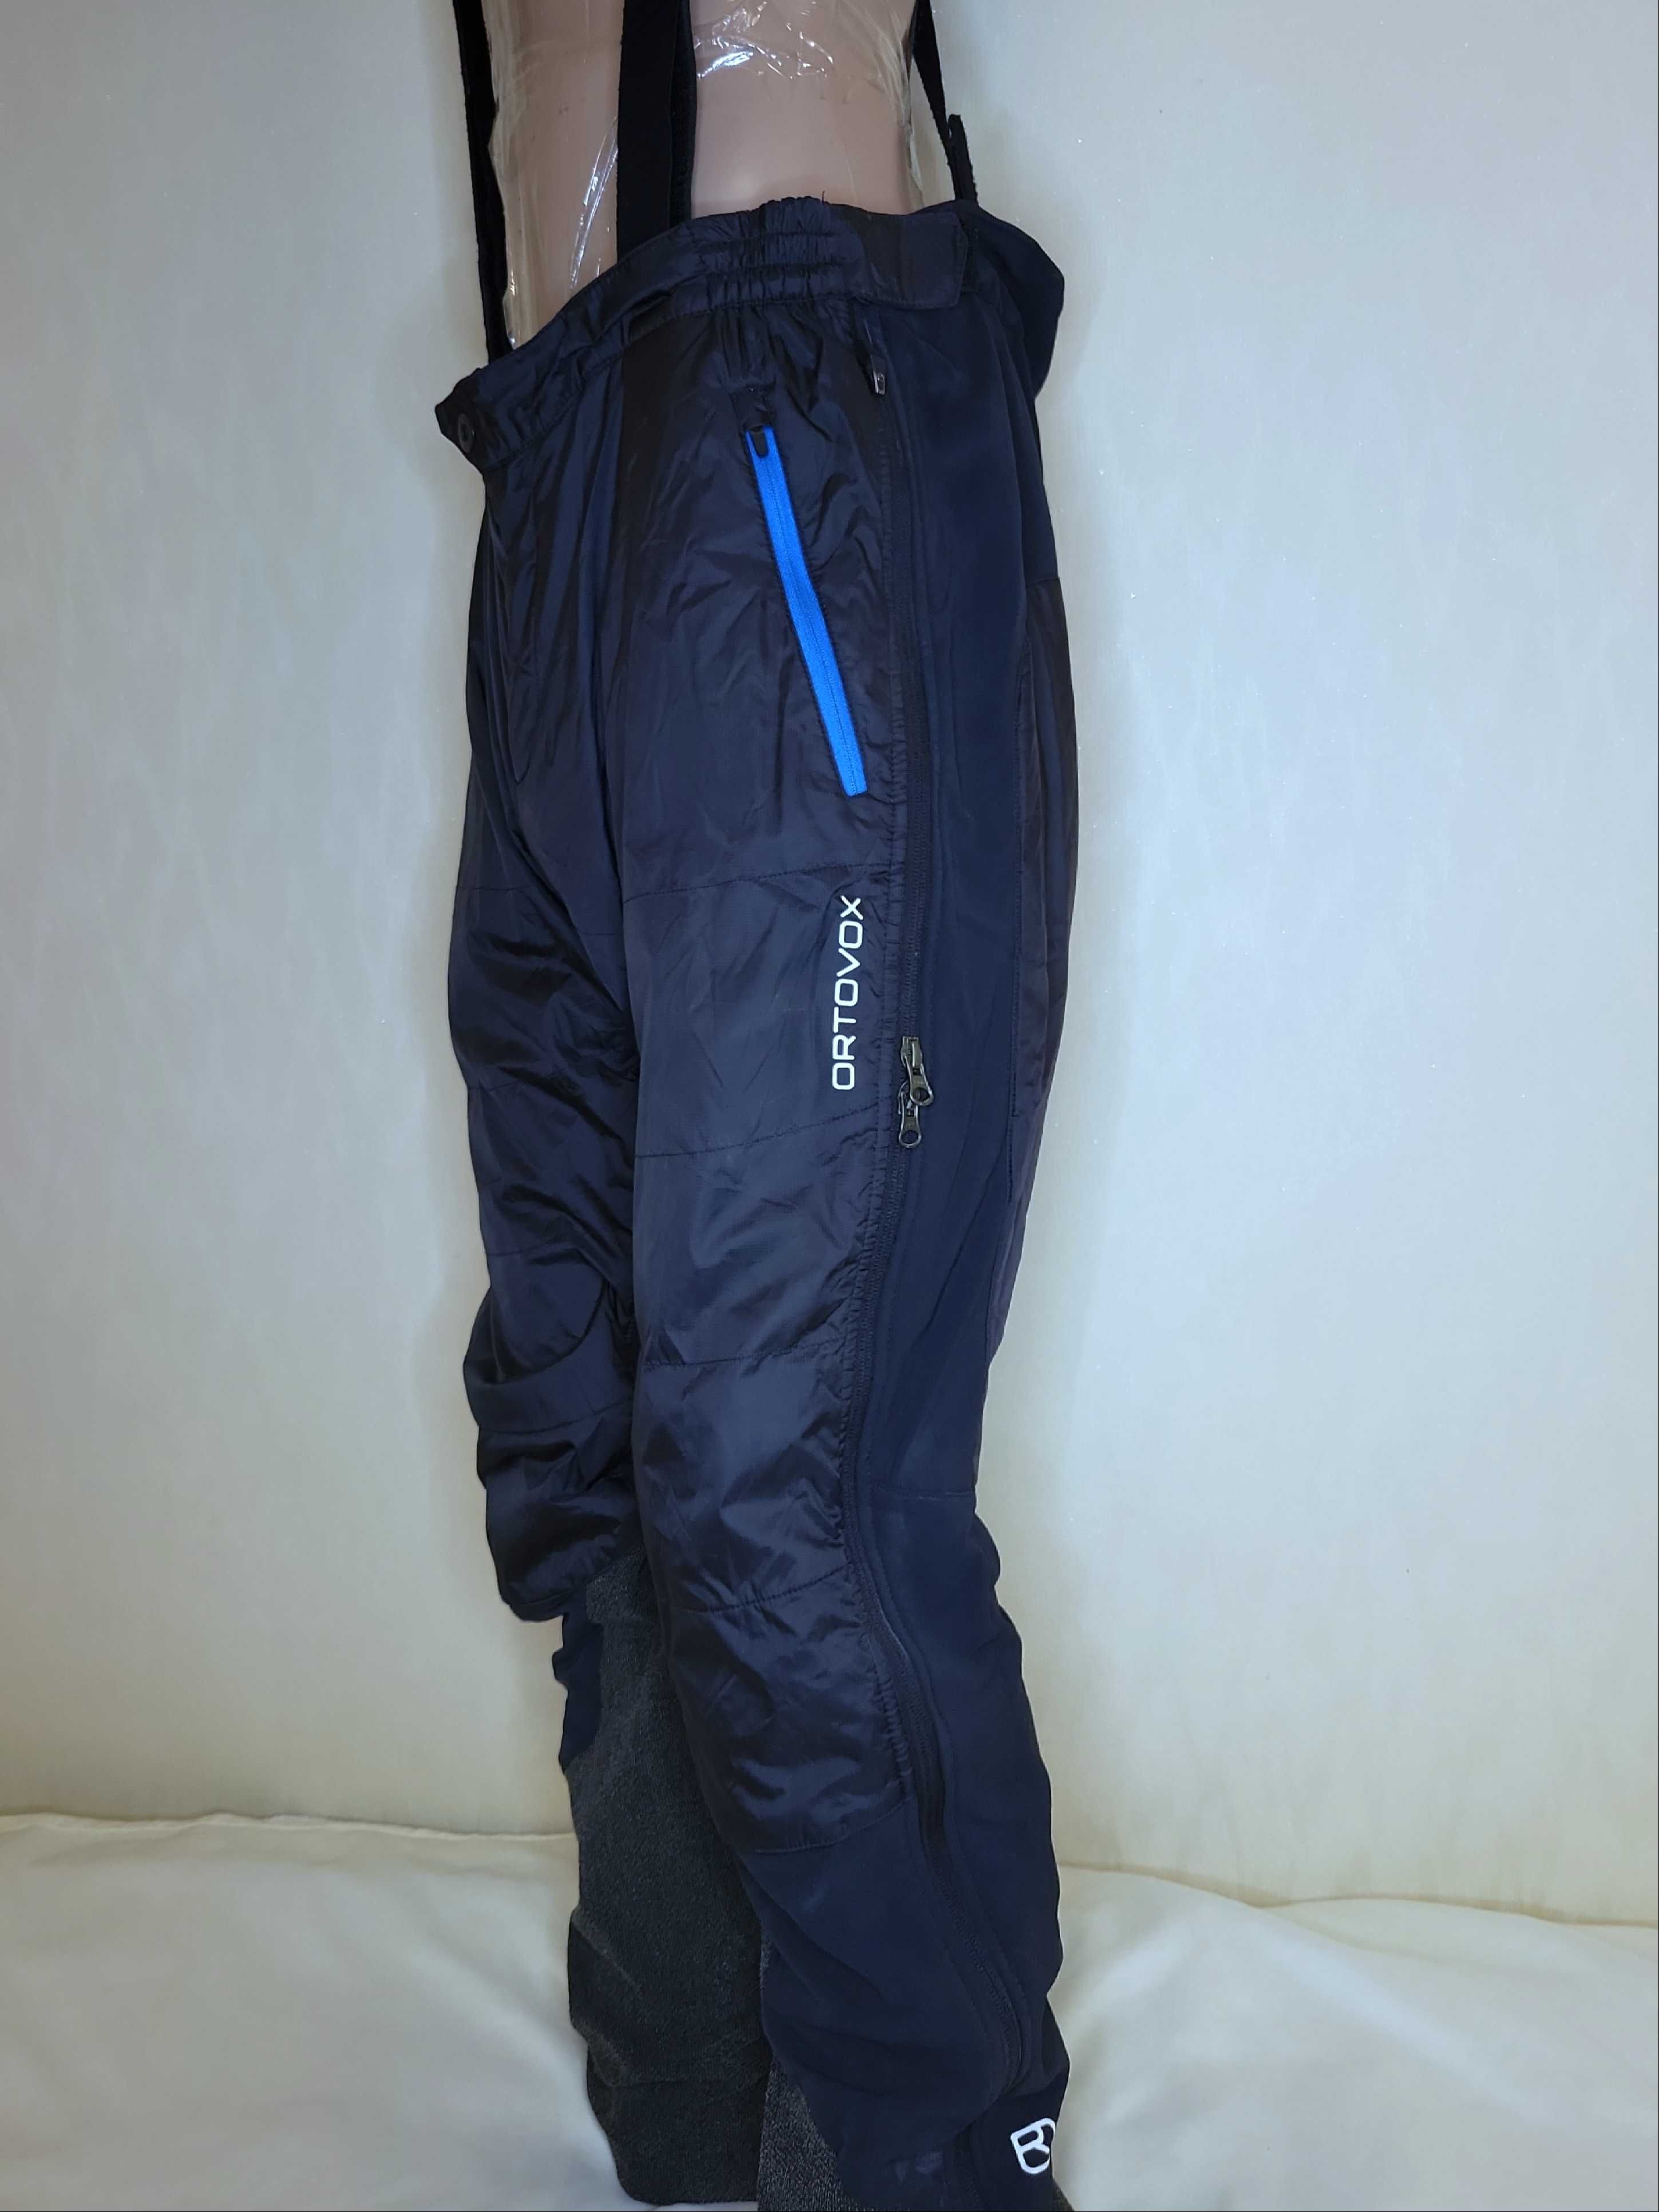 Горнолыжные трекинговые штаны самоскиды Ortovox Merino swiswoll.Inside